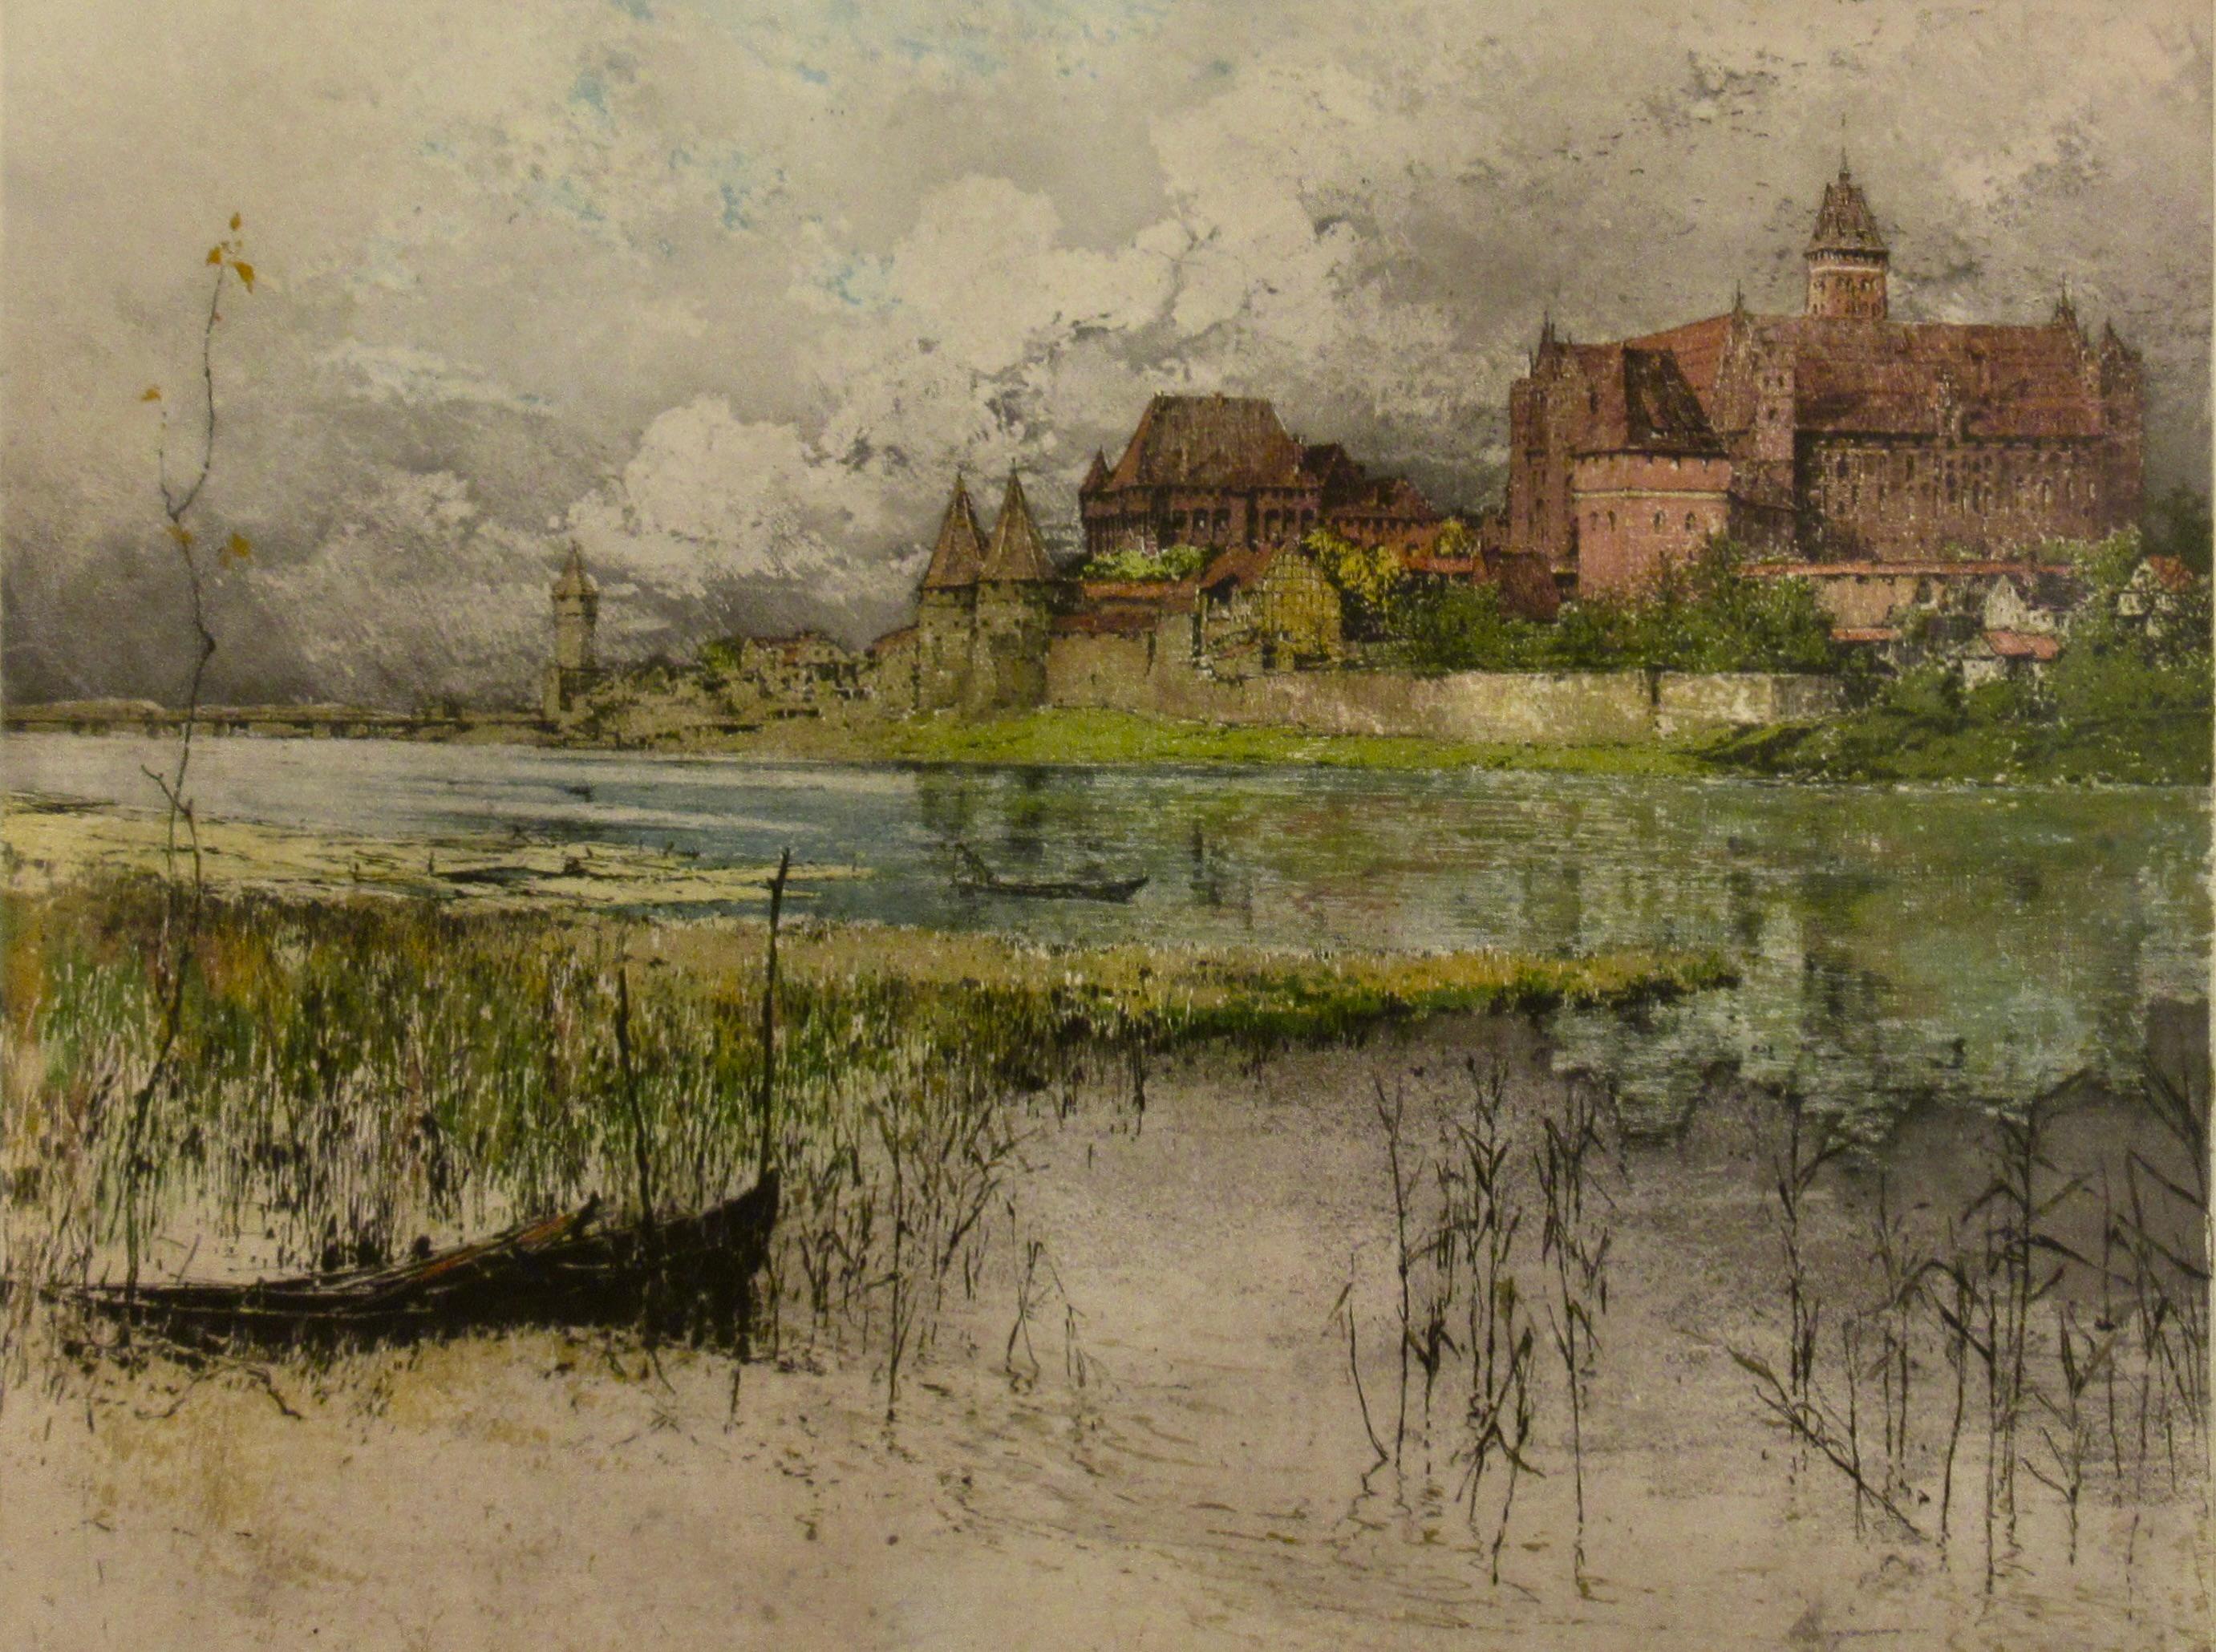 Marienburg Castle, Germany - Realist Print by Luigi Kasimir